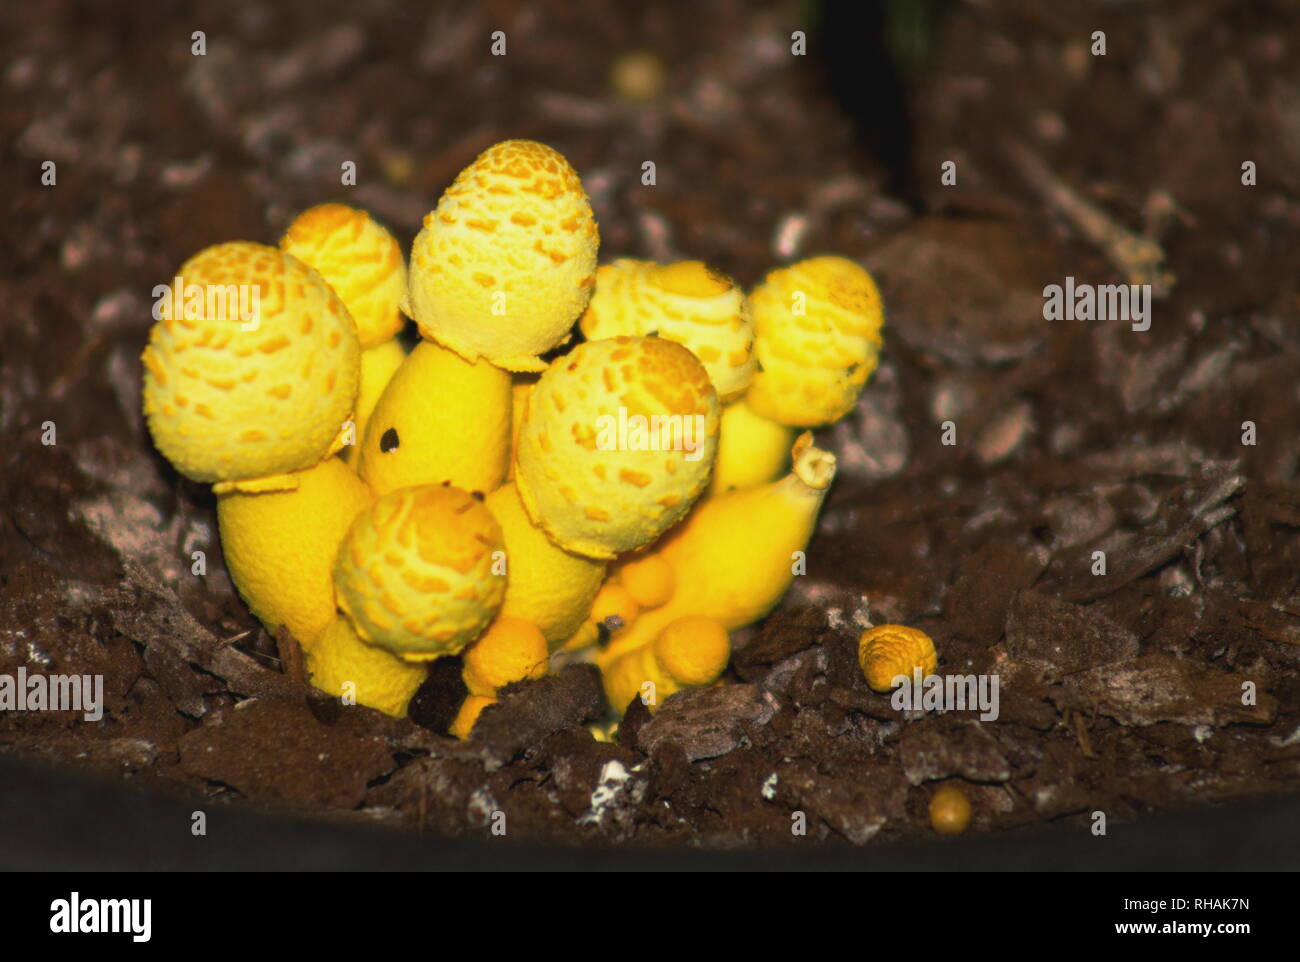 plantpot-dapperling-fungo-leucocoprinus-birnbaumii-noto-anche-come-lepiota-lutea-e-abbastanza-comune-in-vasi-di-piante-e-le-serre-rhak7n.jpg